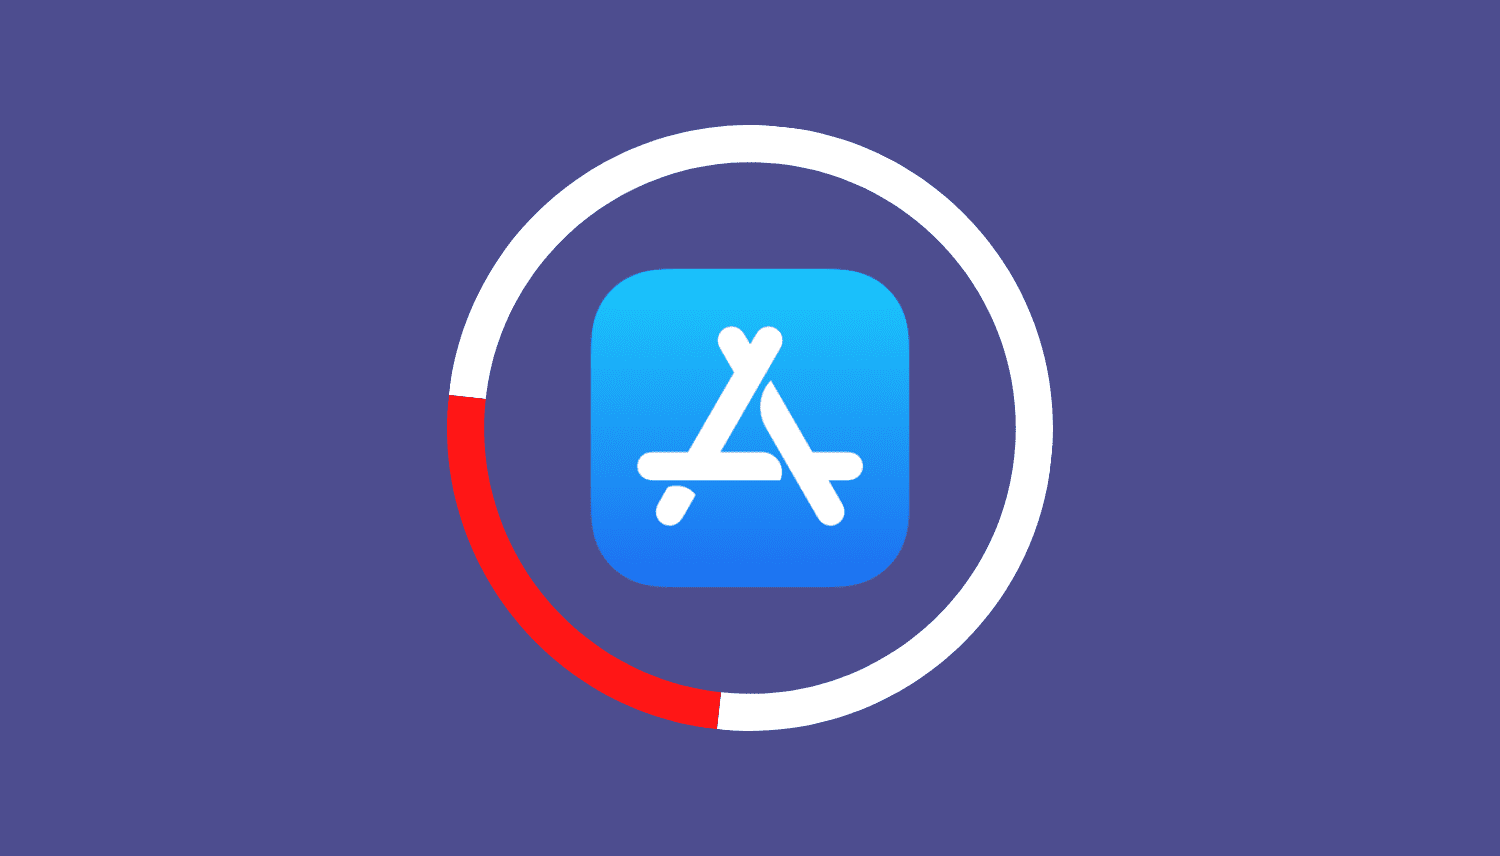 App Store icon on a dark background